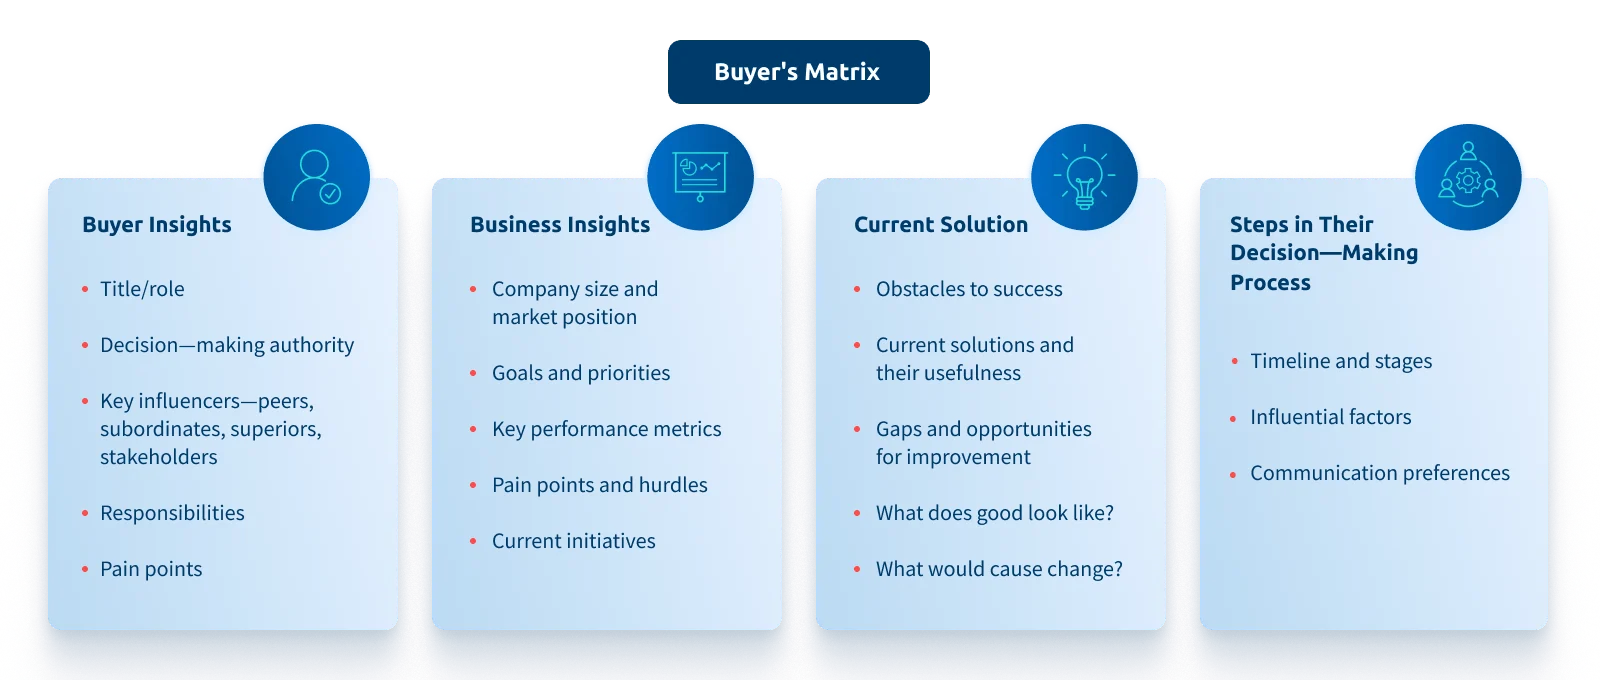 Buyer's Matrix Infographic